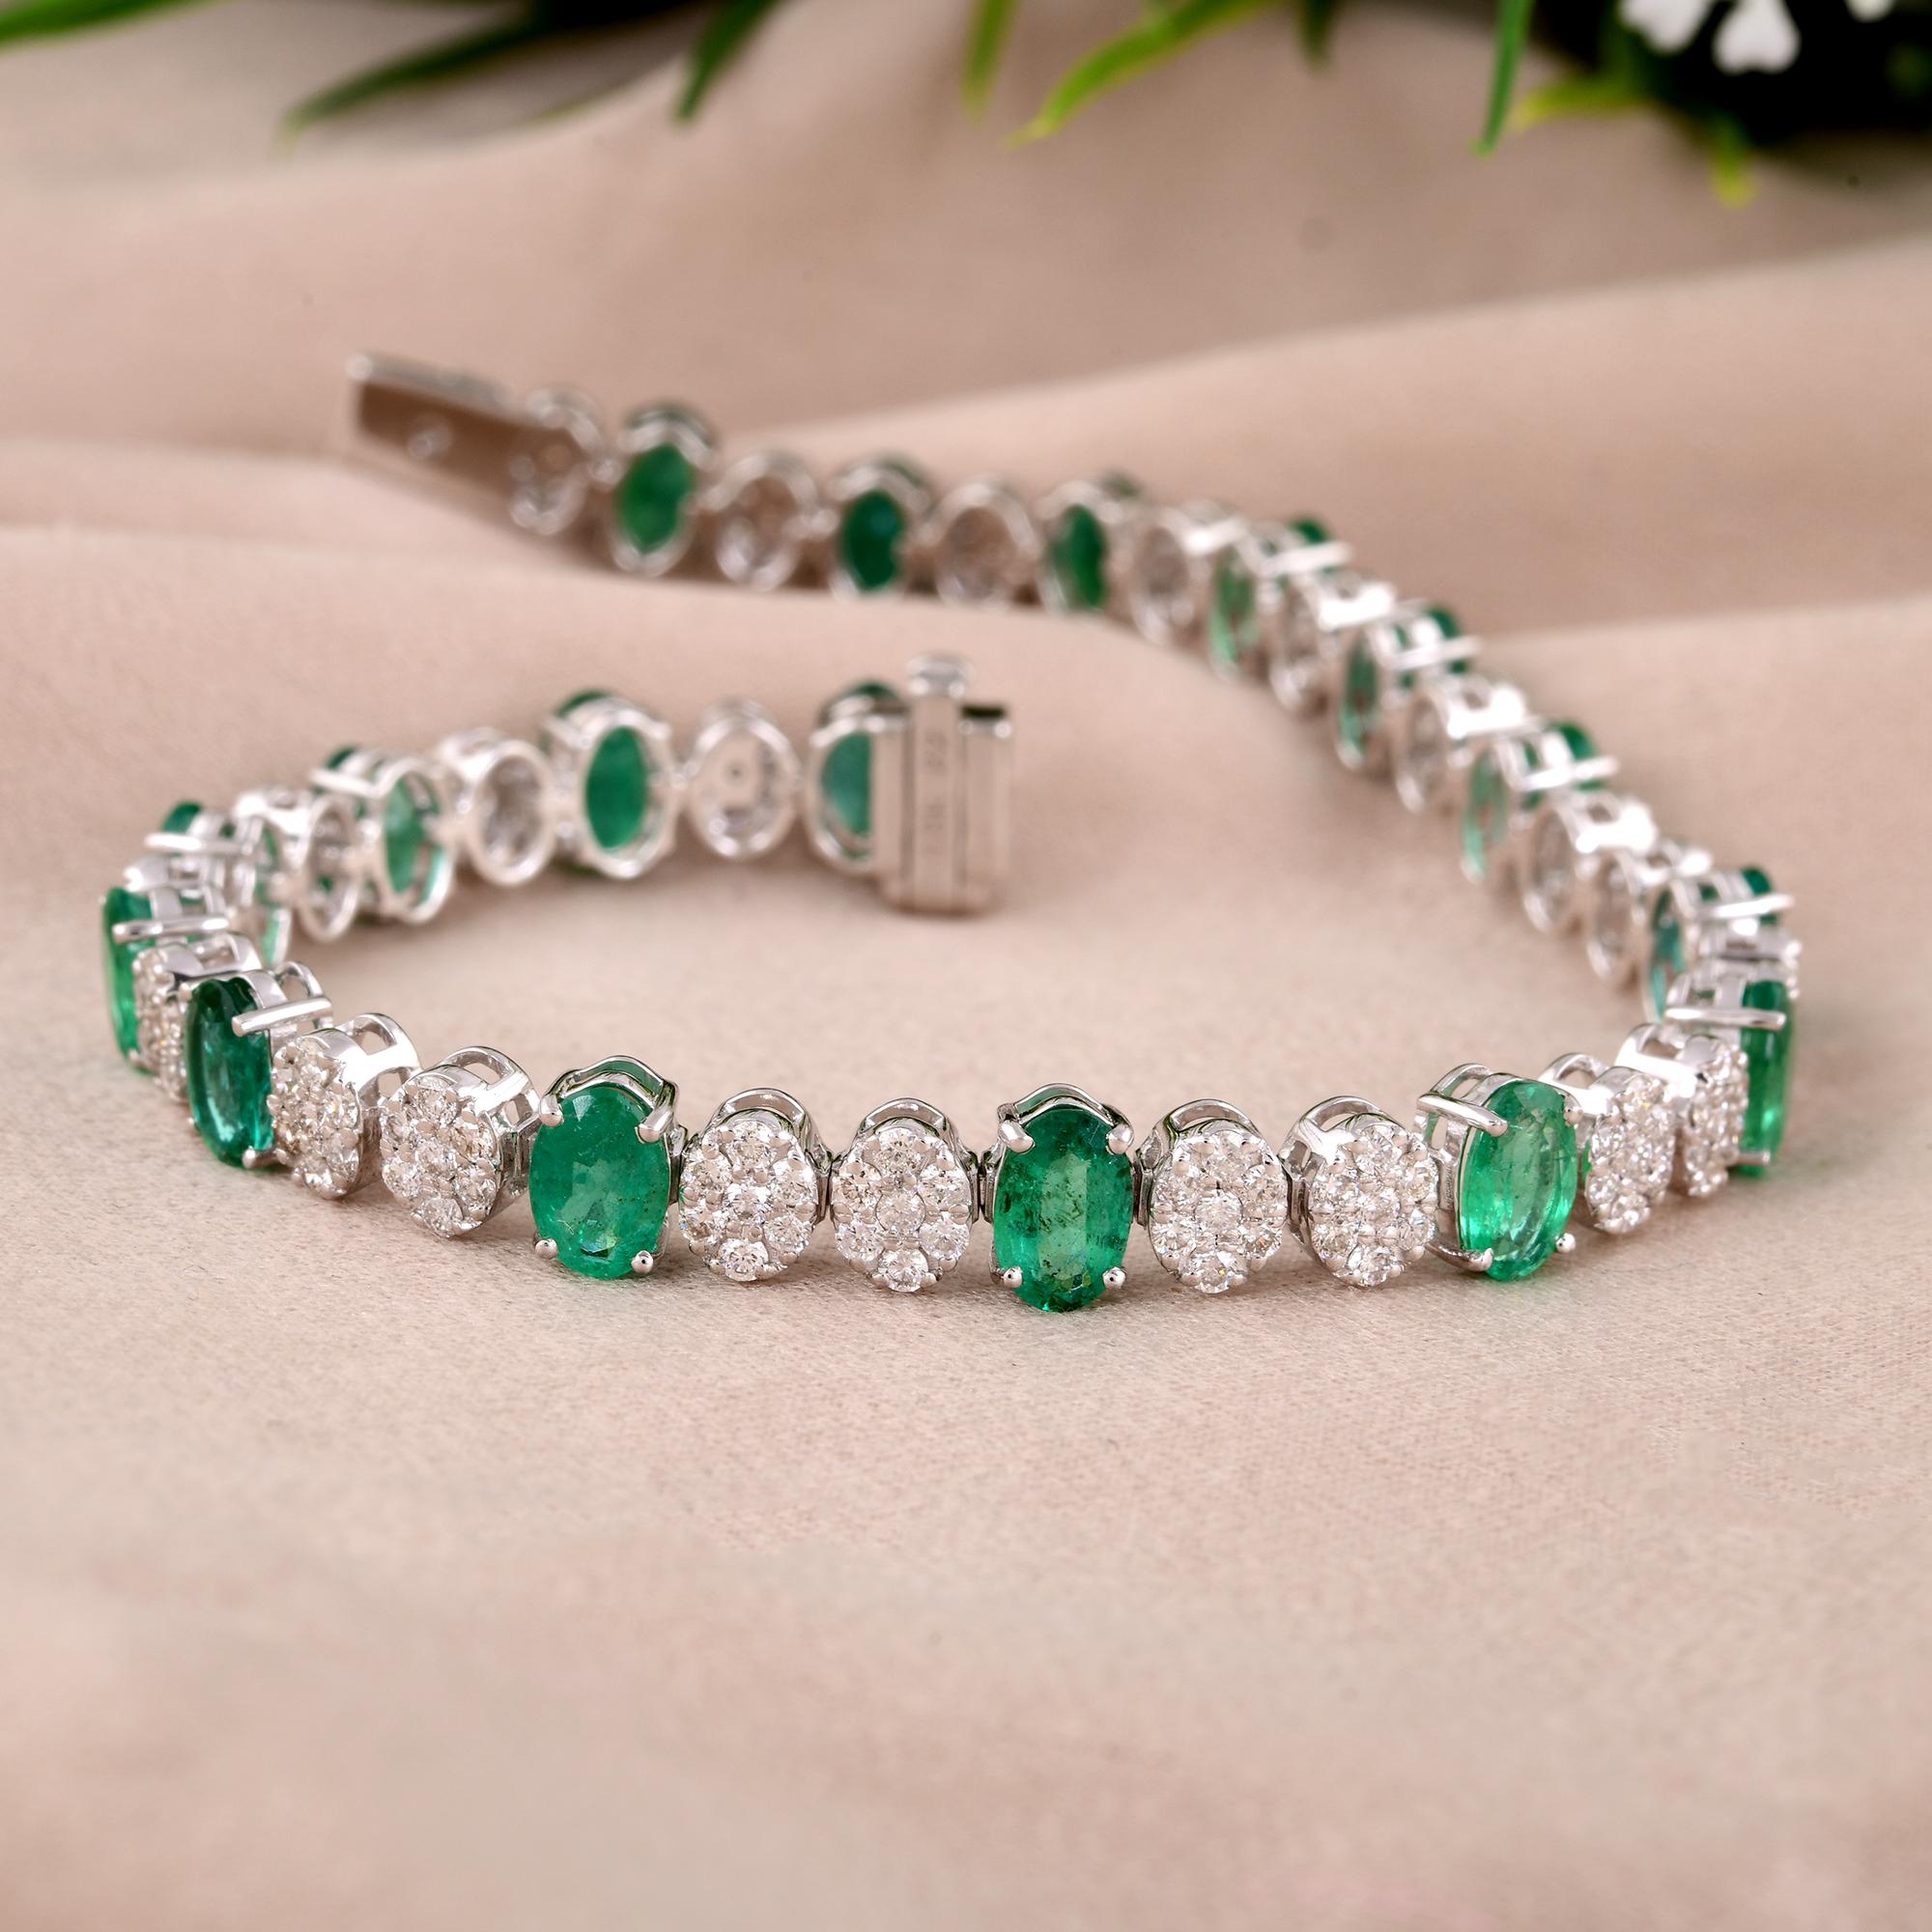 Oval Cut Oval Zambian Emerald Gemstone Bracelet Pave Diamond 18 Karat White Gold Jewelry For Sale